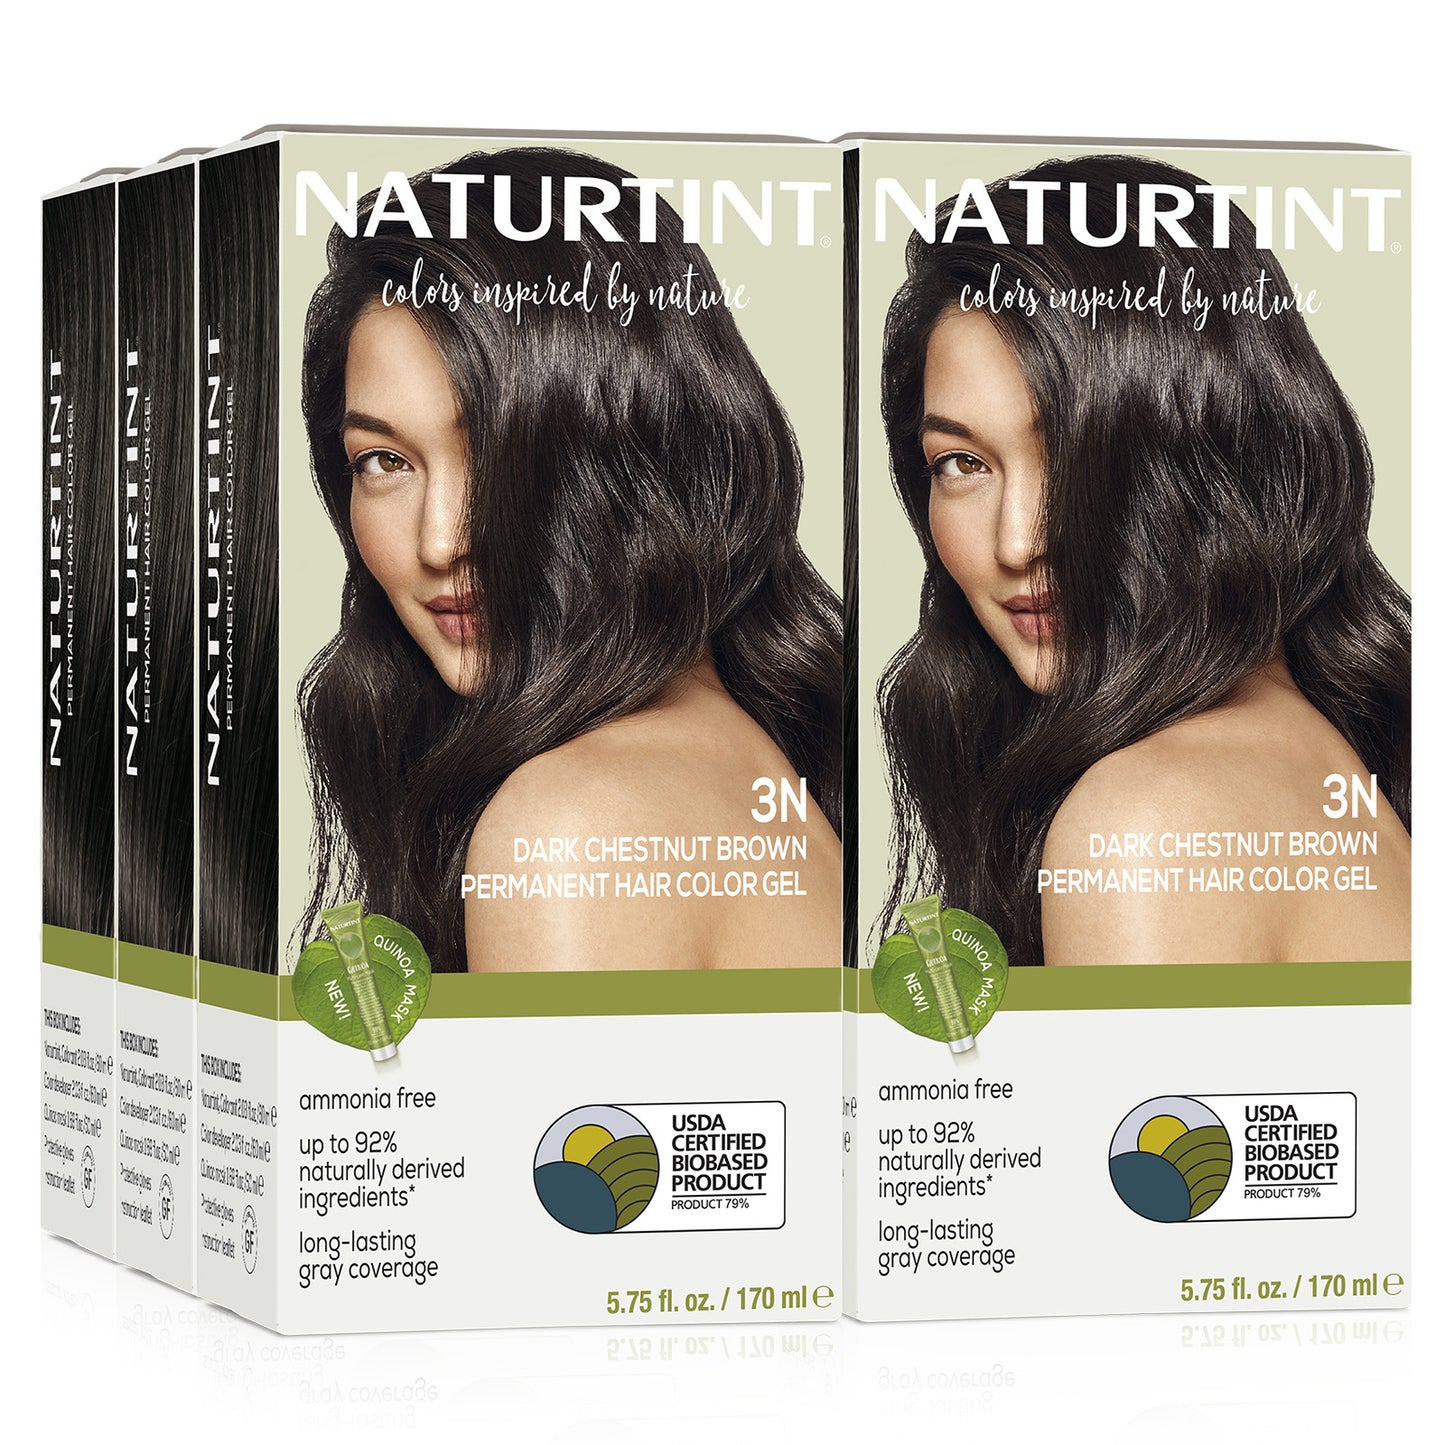 Naturtint Permanent Hair Color 3N Dark Chestnut Brown (Packaging may vary)